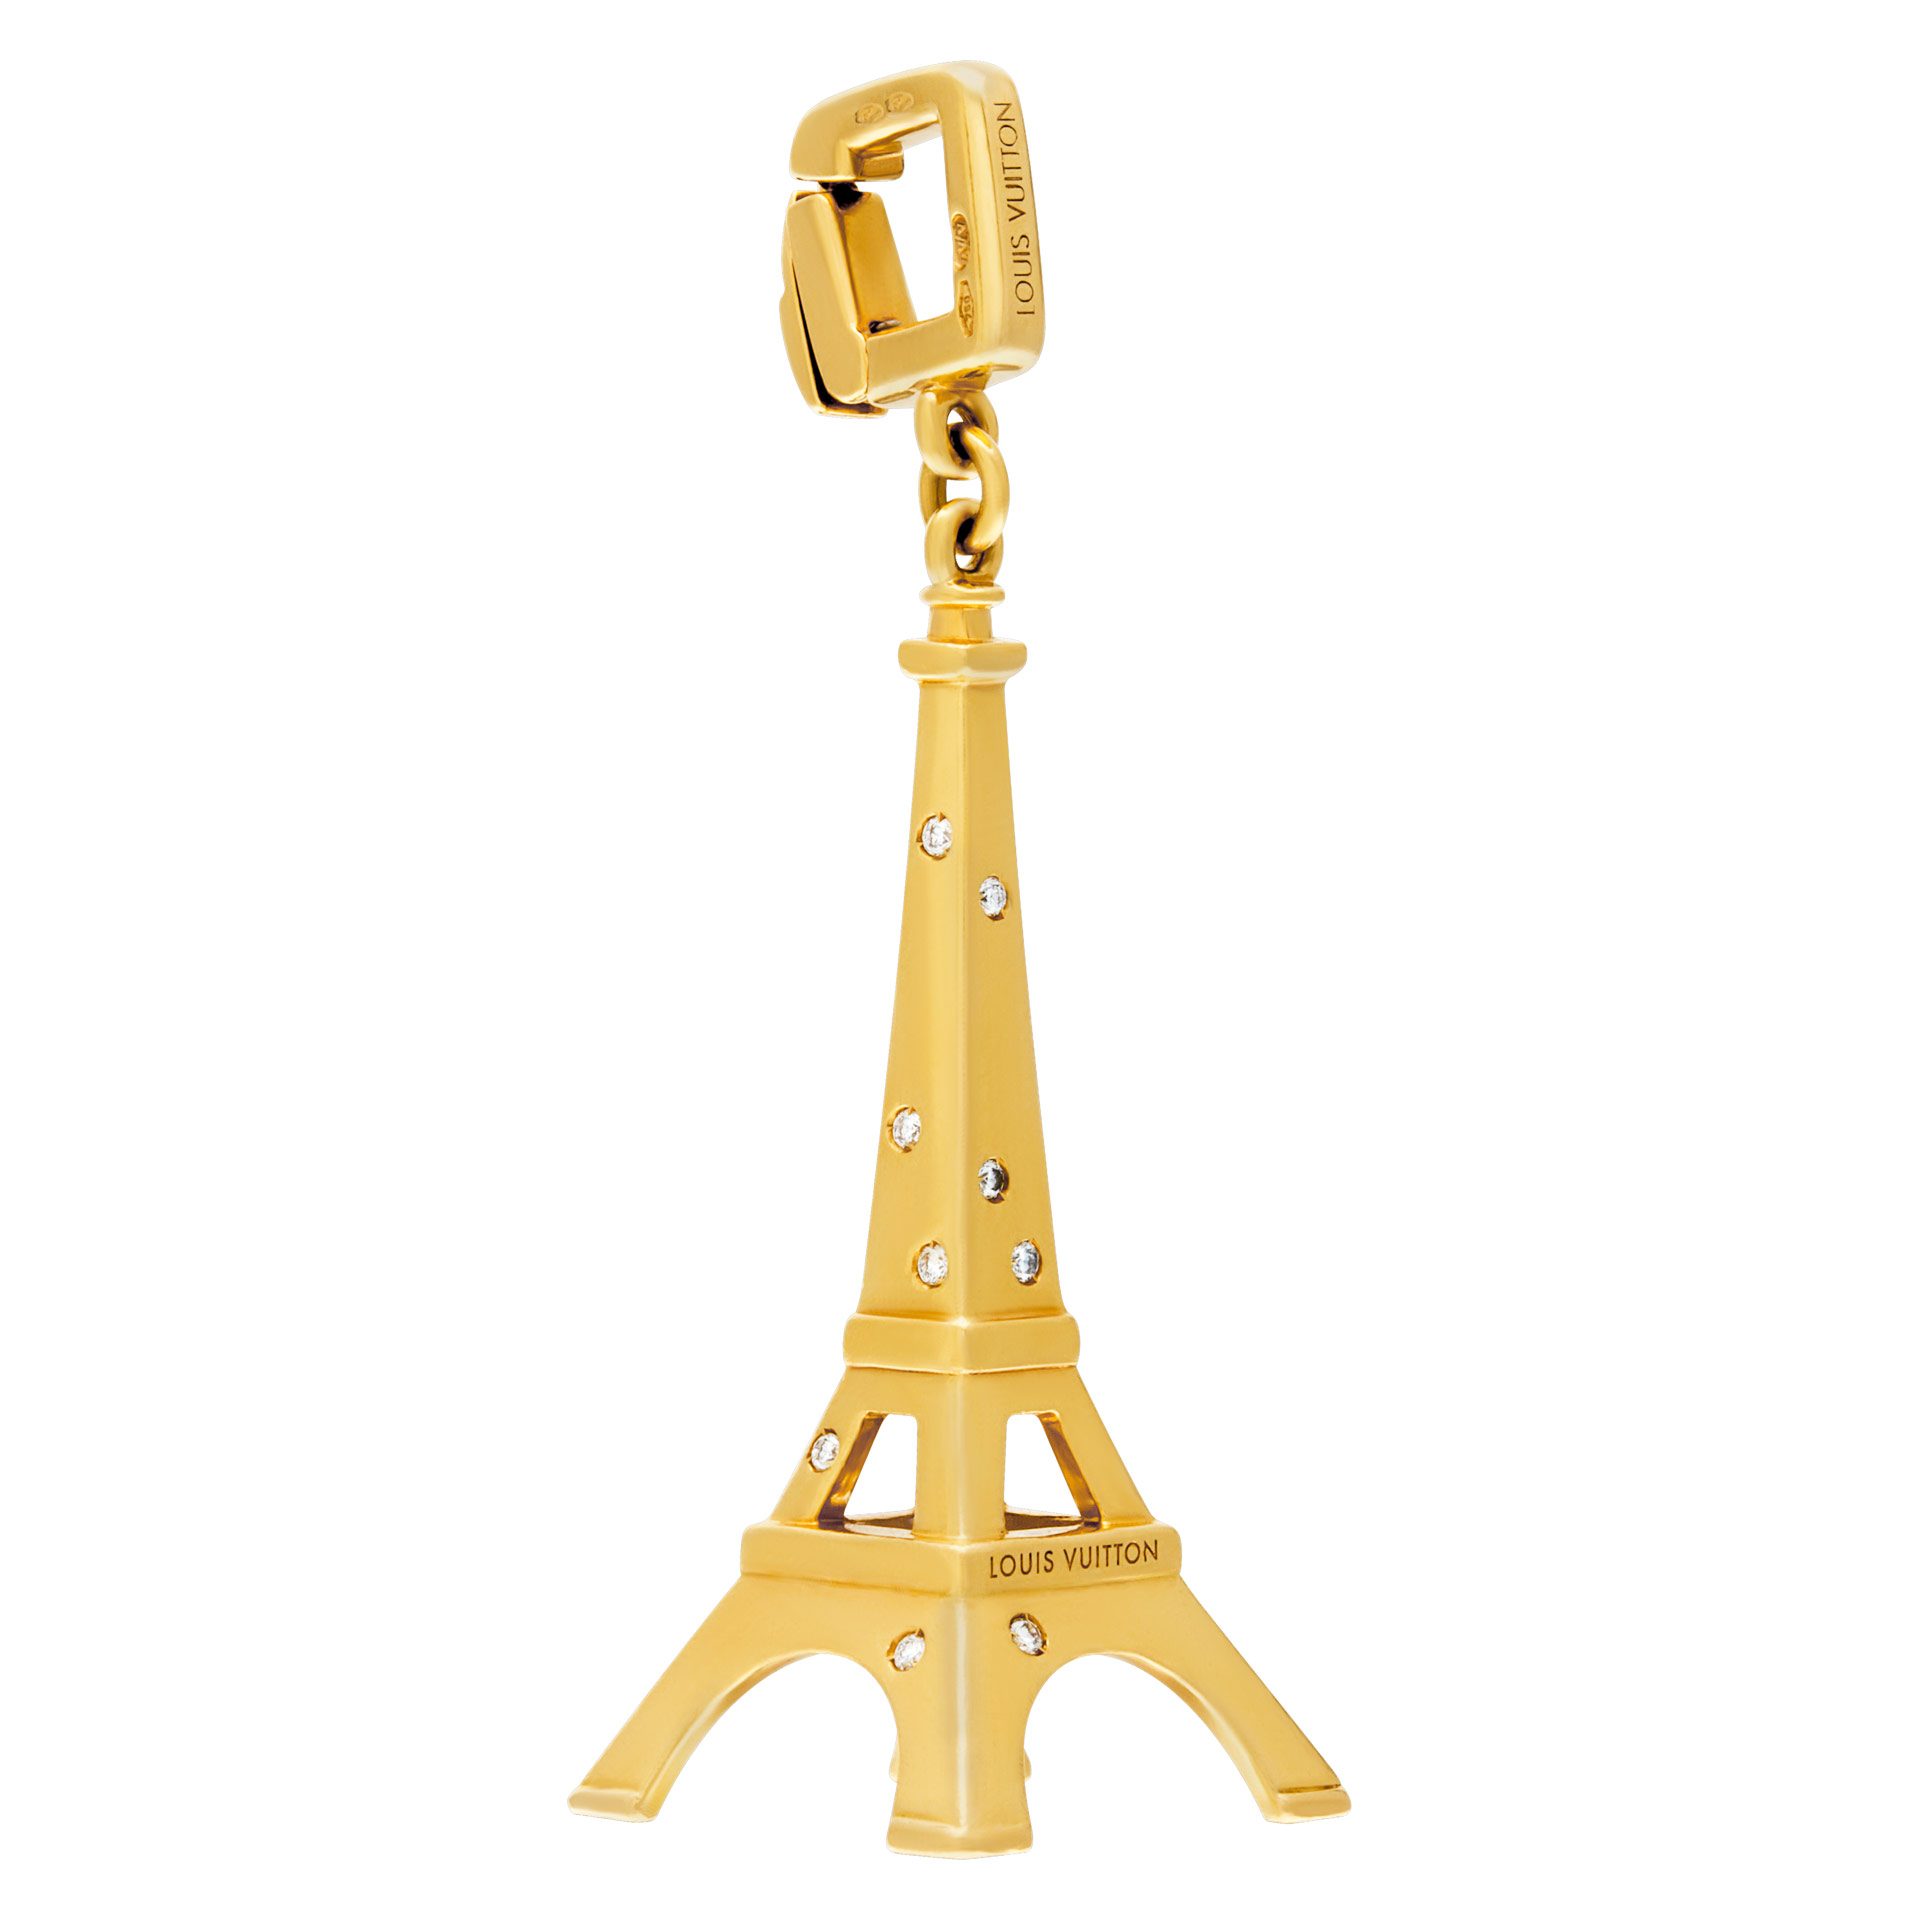 Louis Vuitton Tour Eiffel charm with diamonds in 18k image 1